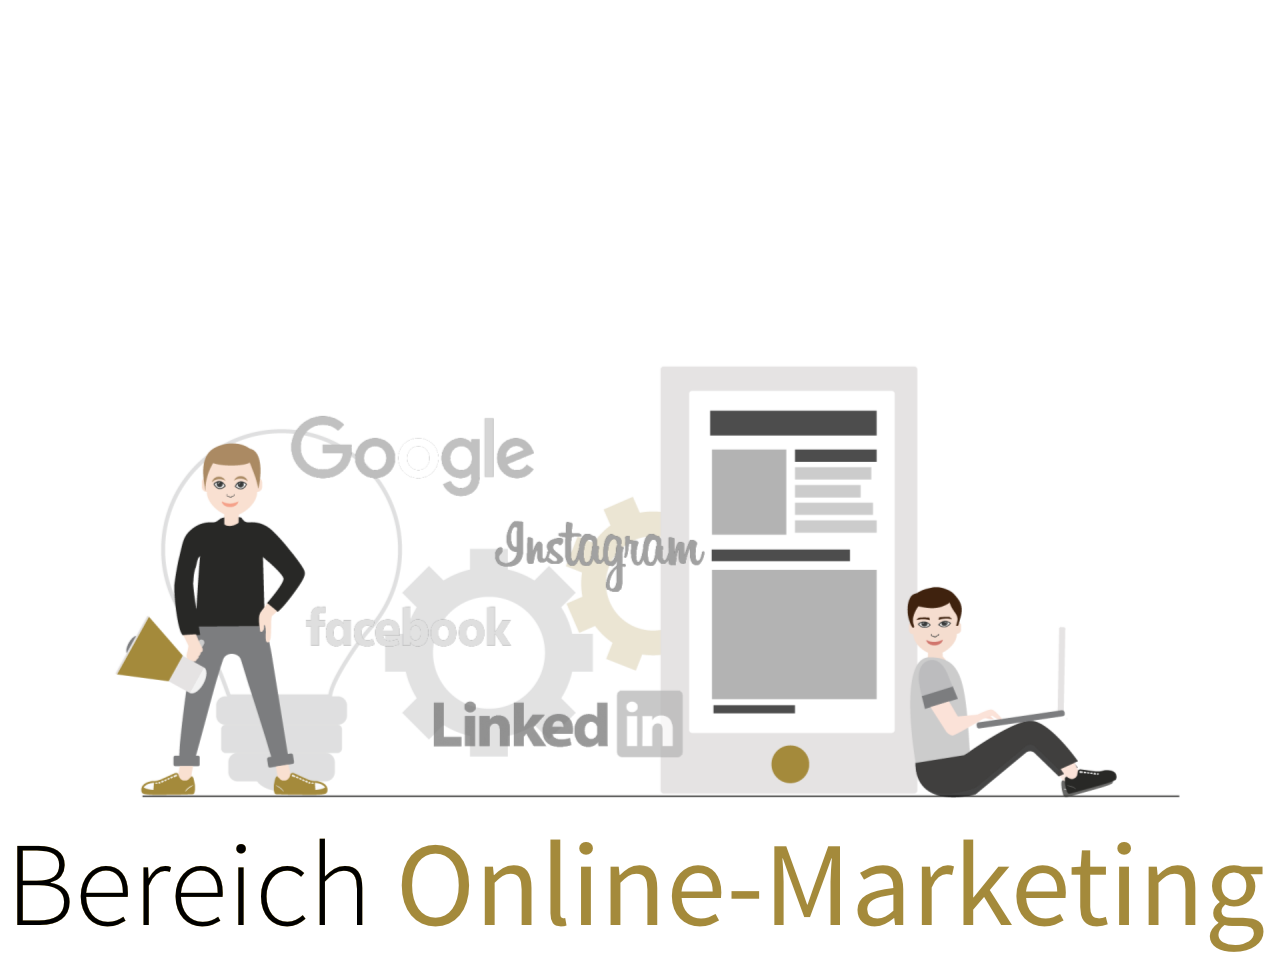 Online marketing optimization